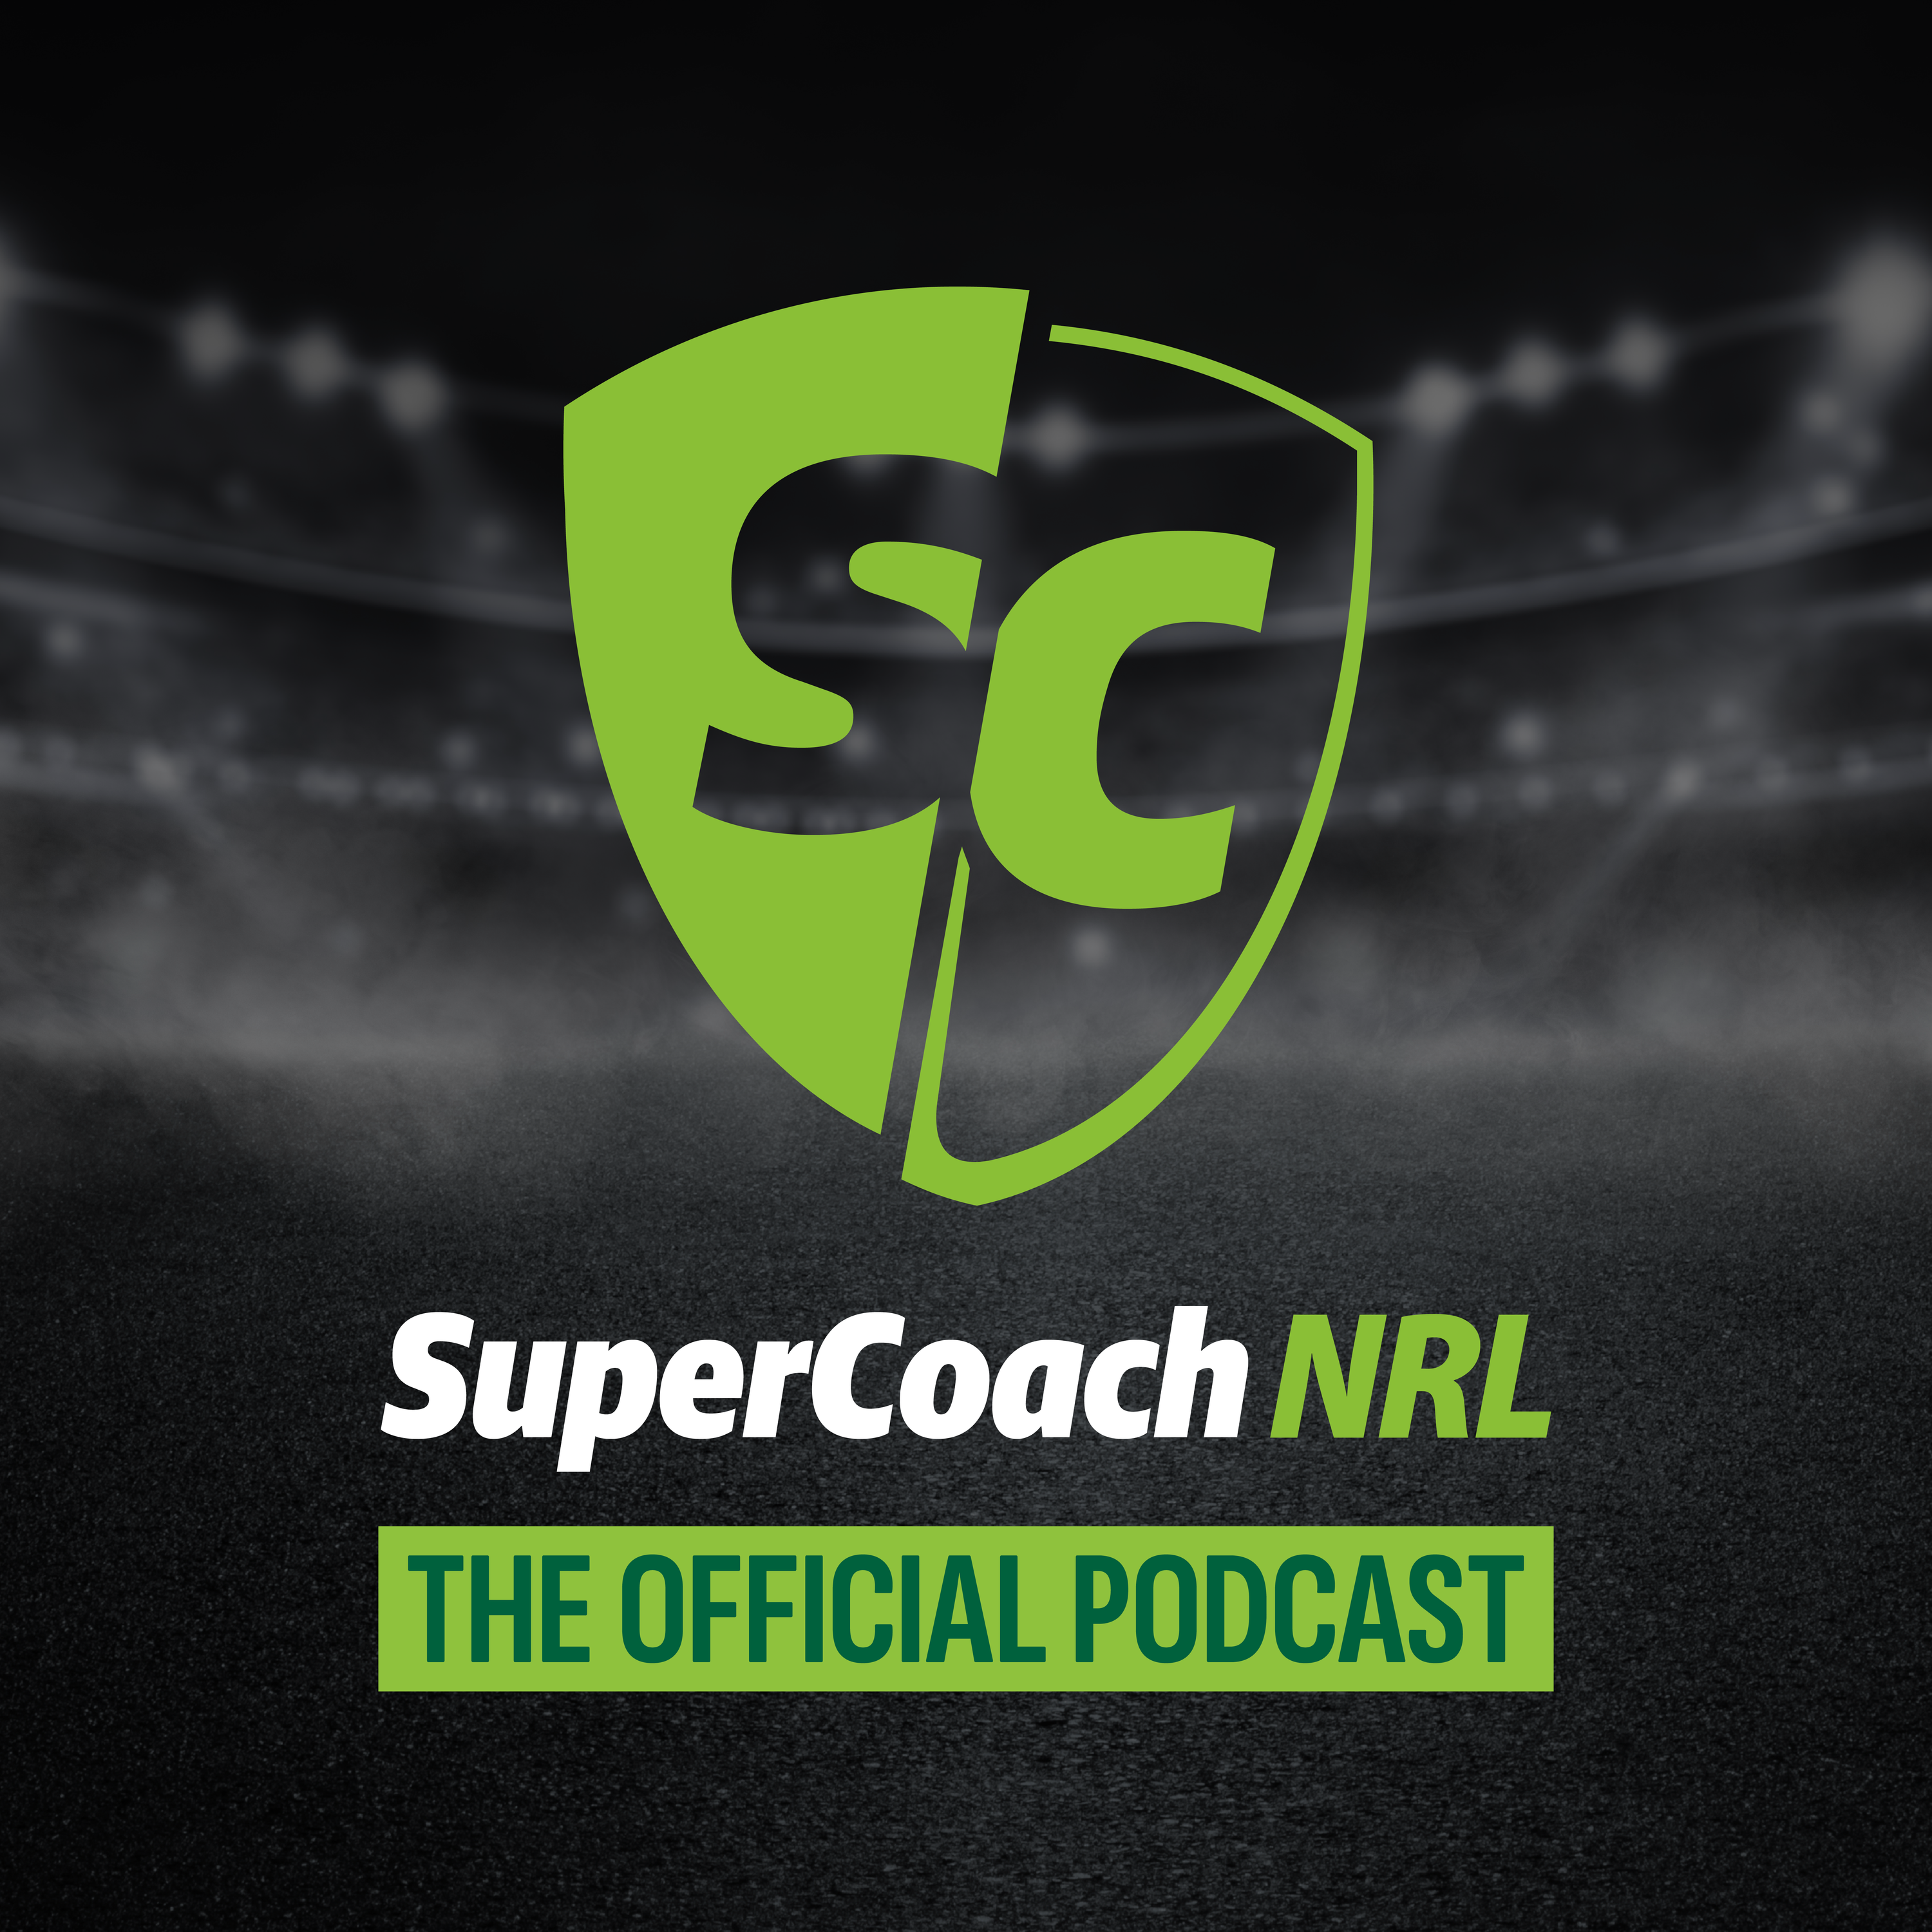 KFC SuperCoach podcast: Countdown Show Round 5